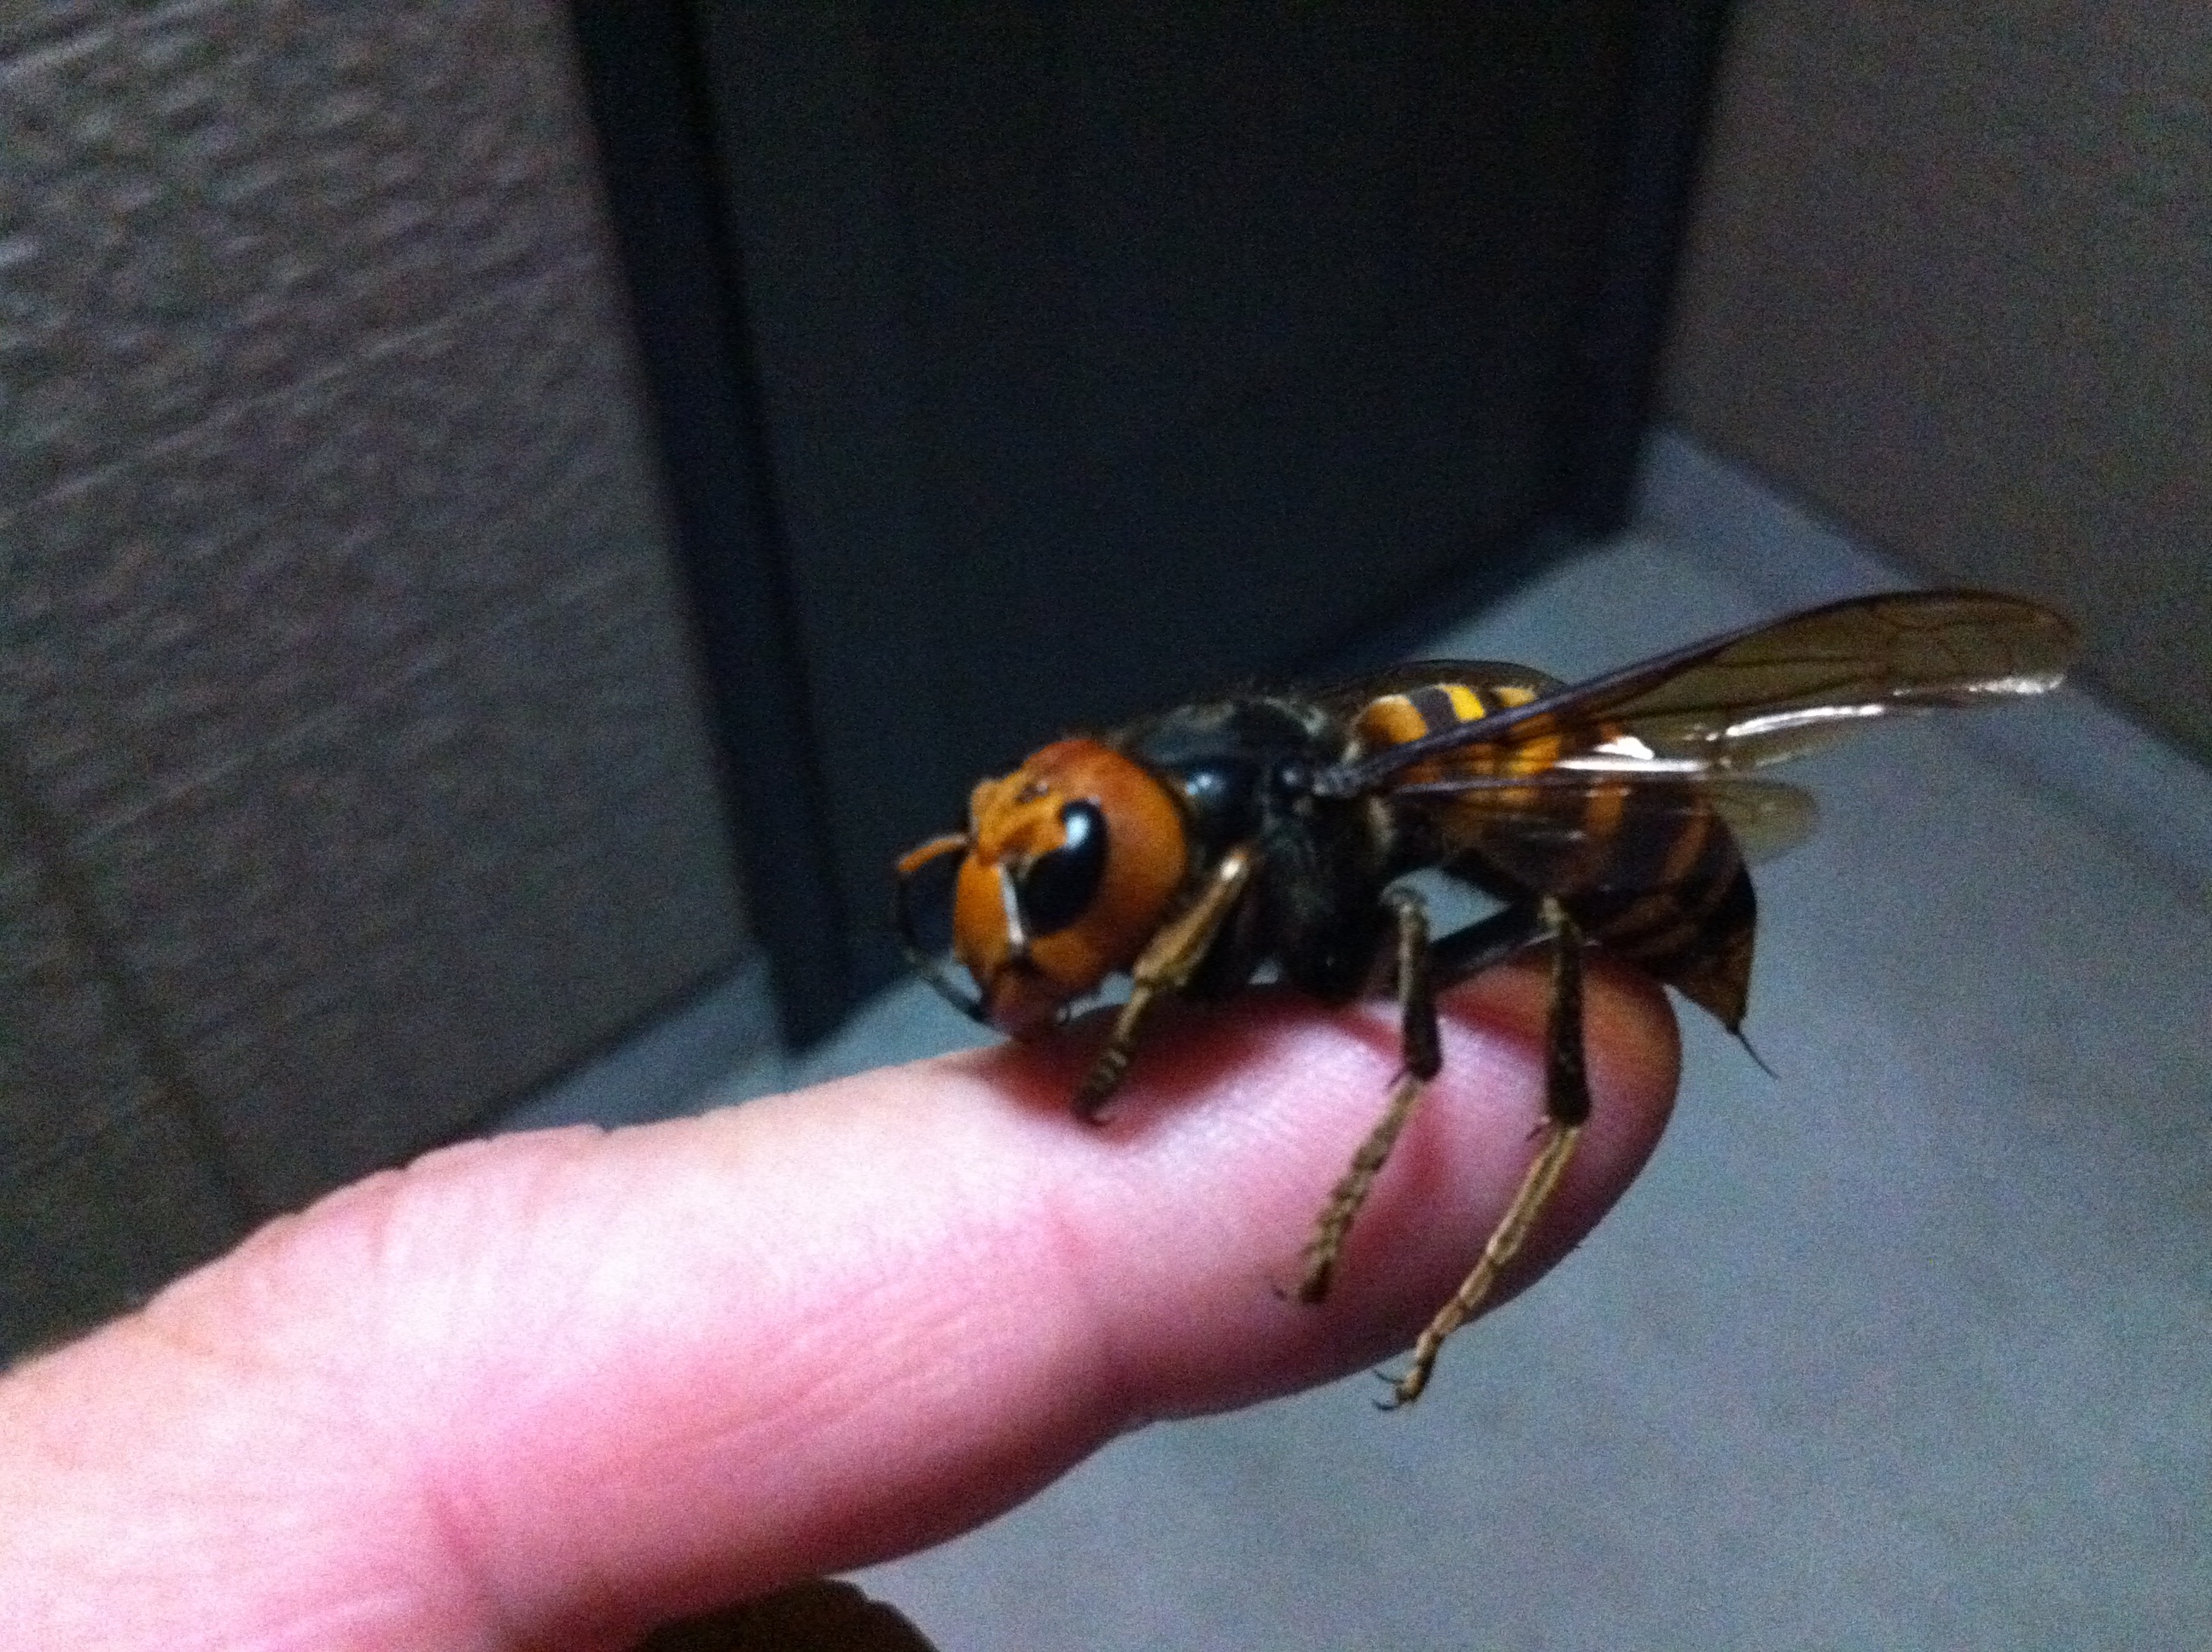 asian cicada